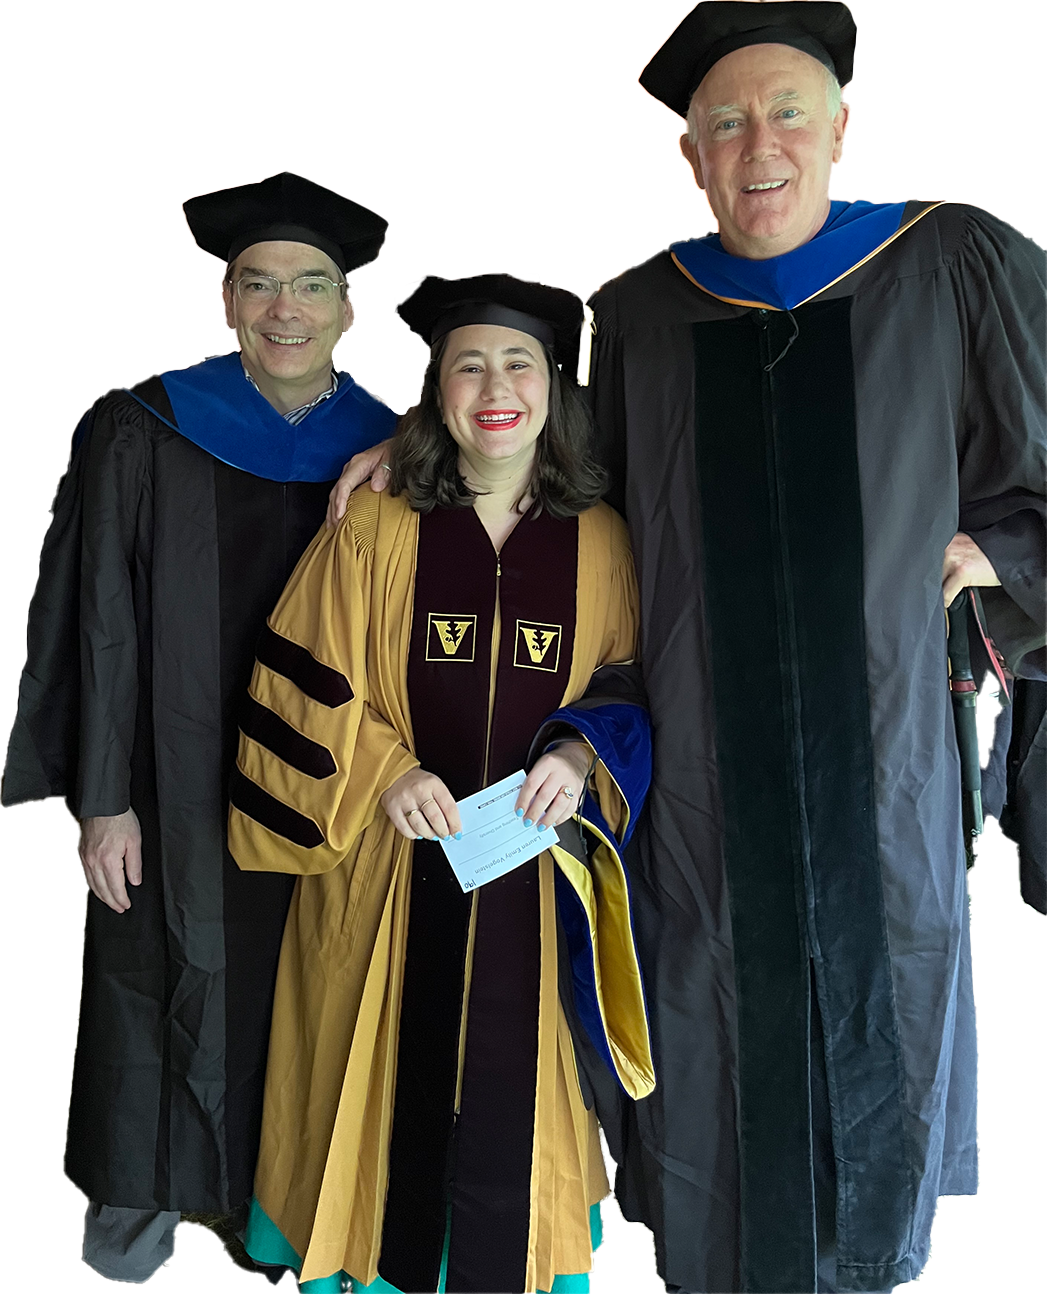 Lauren and her professors at Northwestern University